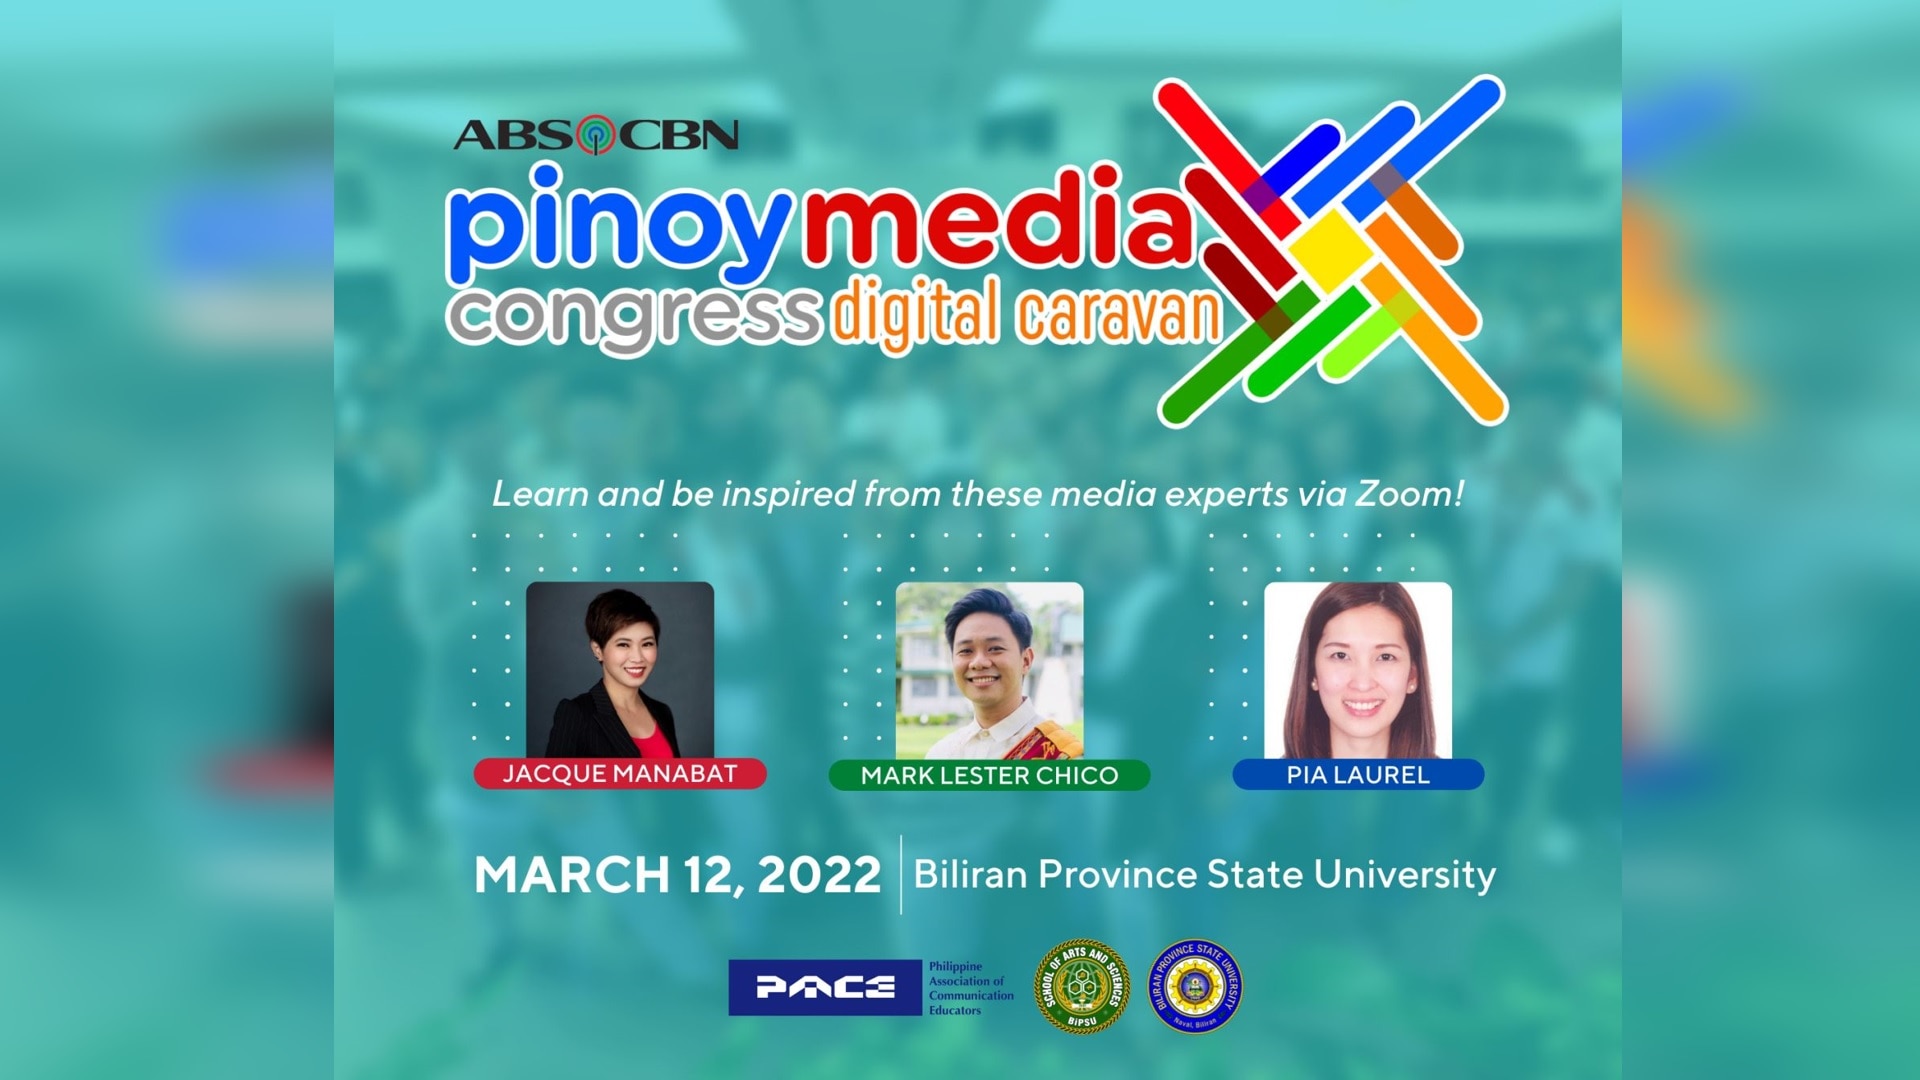 ABS-CBN brings back Pinoy Media Congress via digital caravan